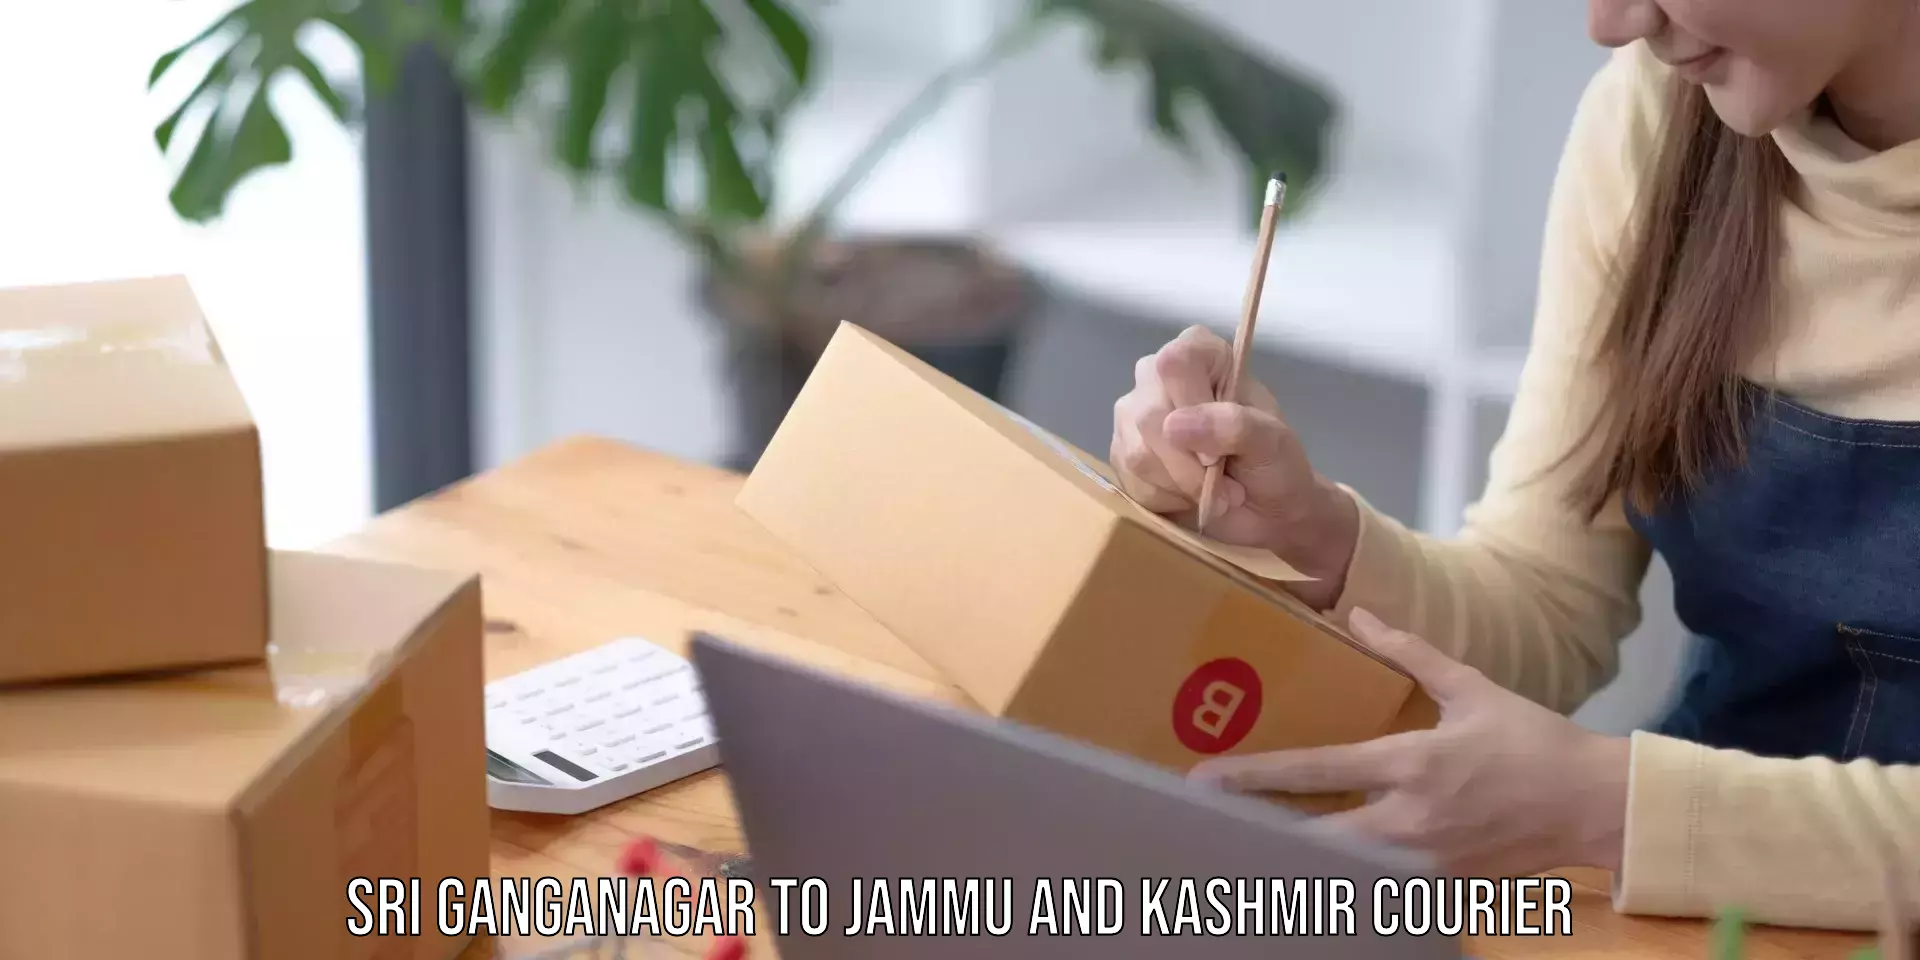 User-friendly delivery service Sri Ganganagar to Jammu